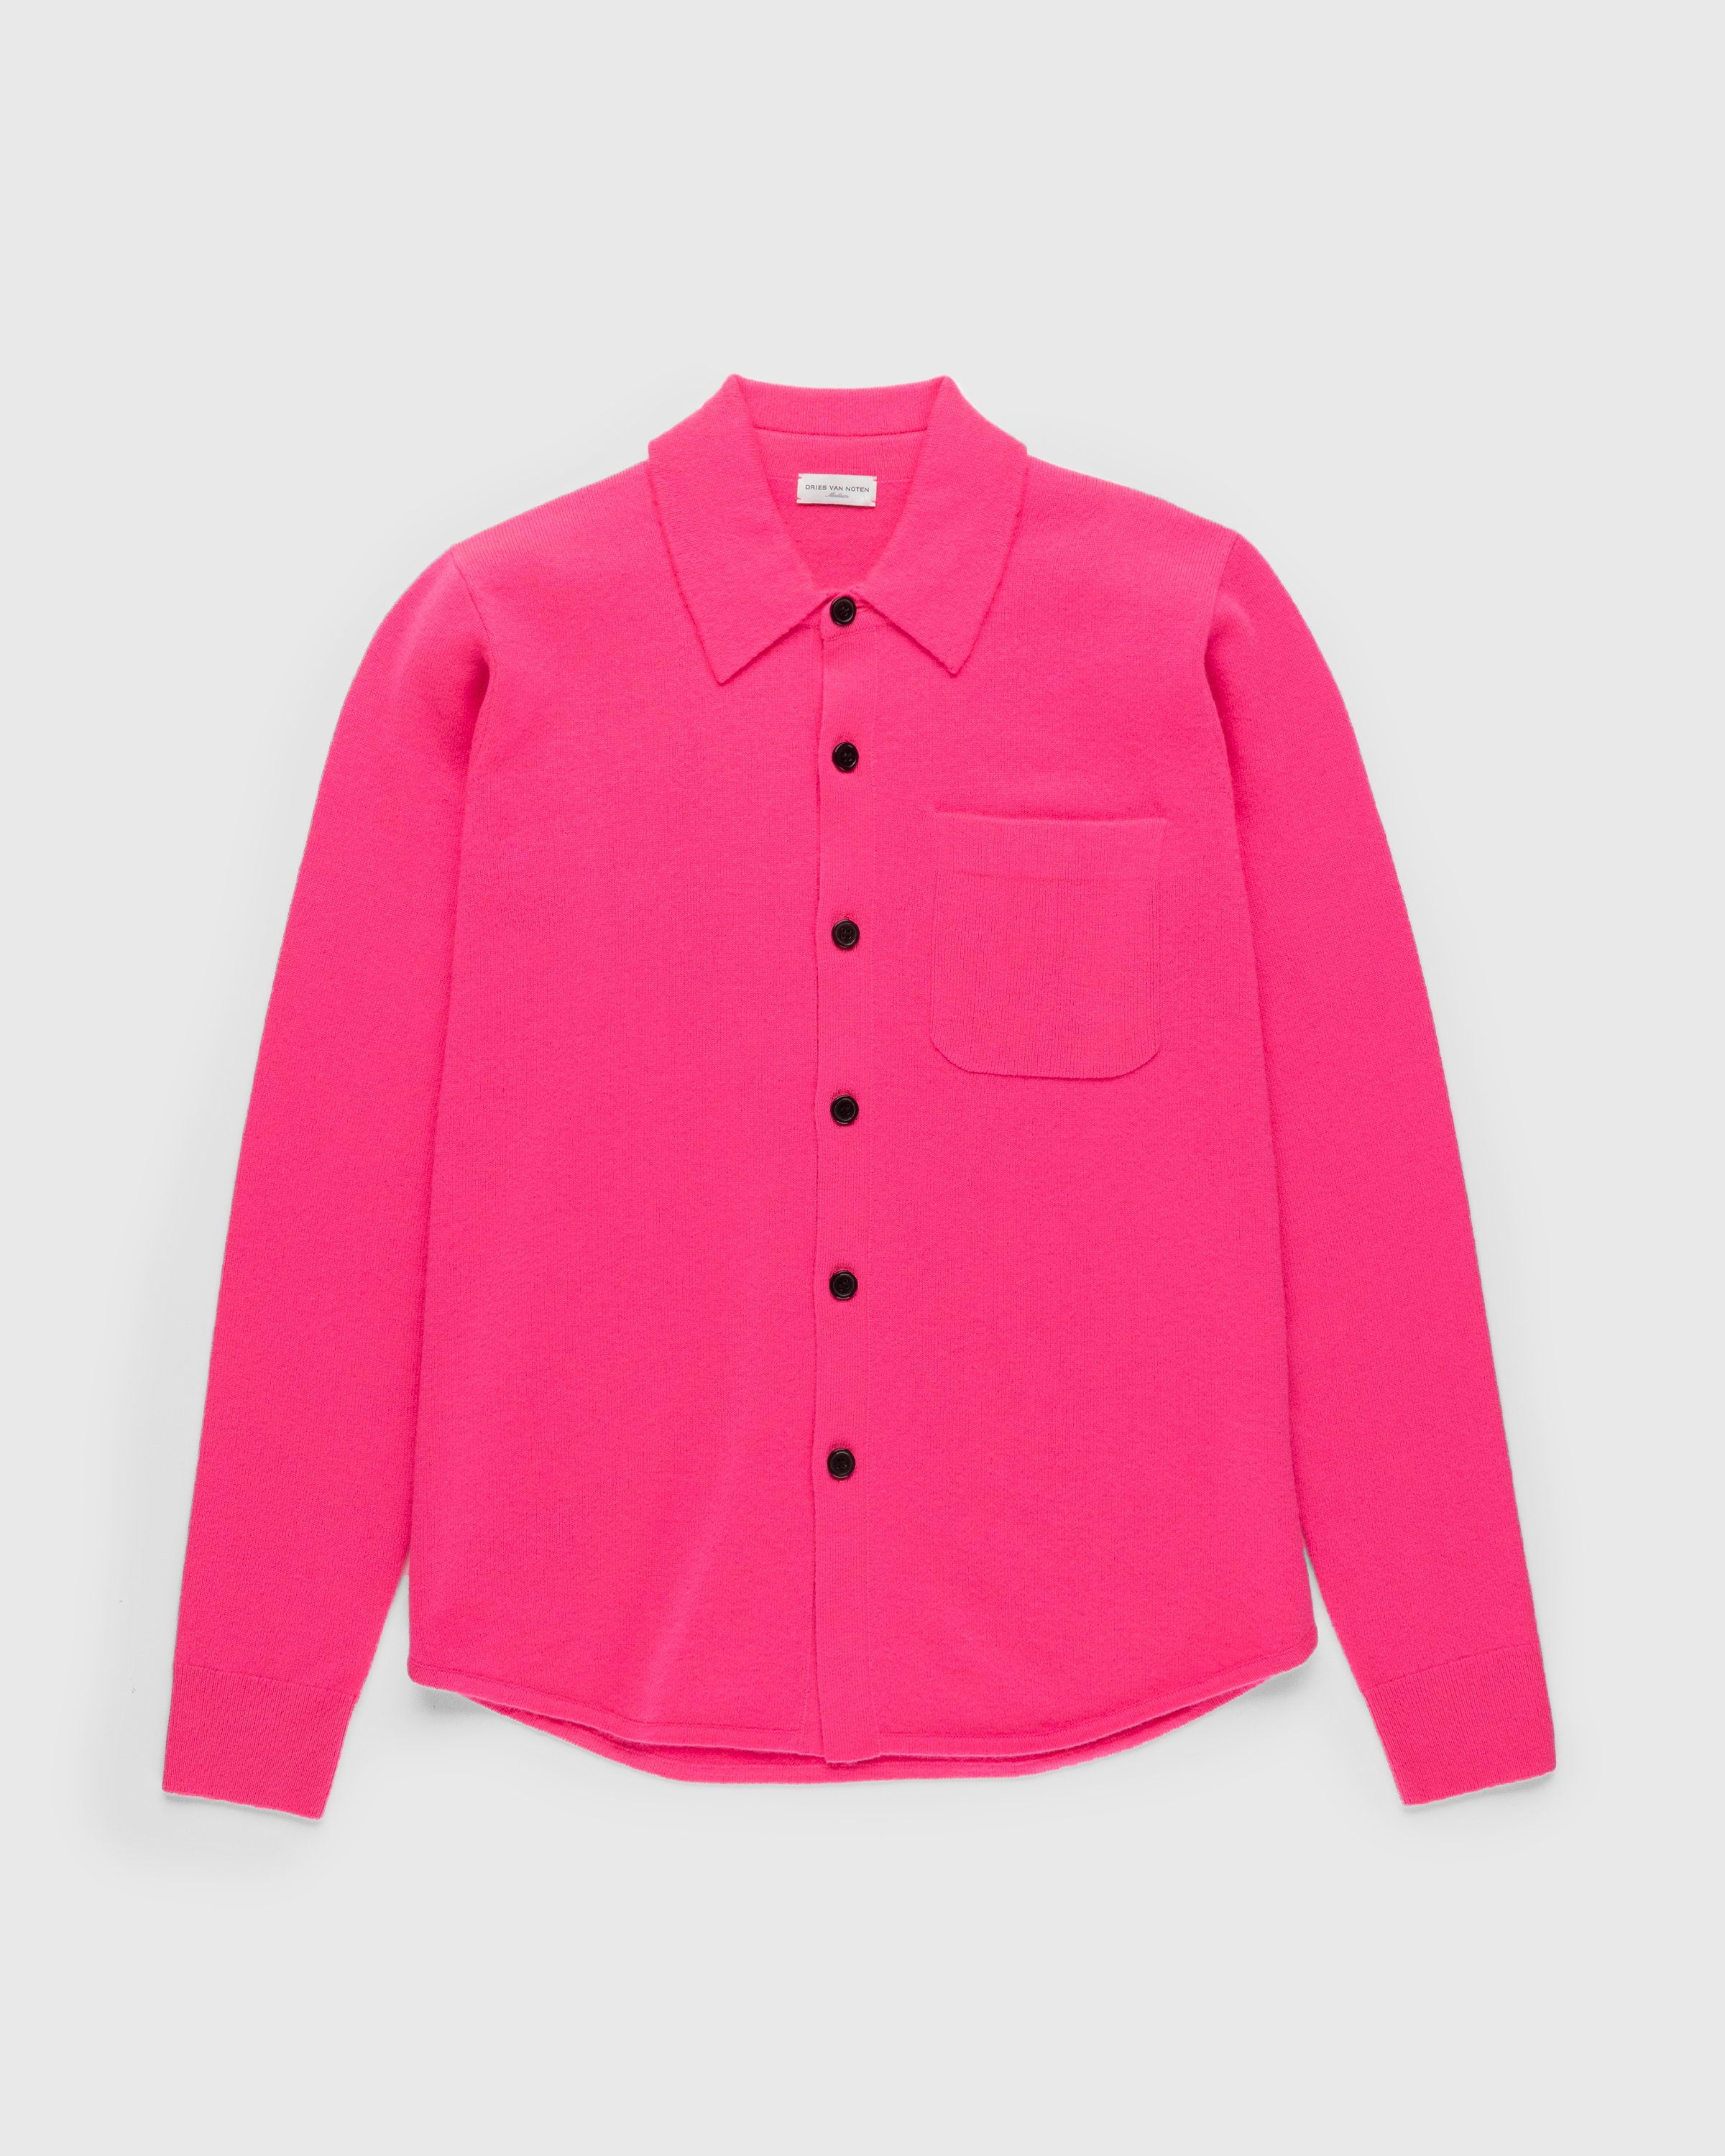 Dries van Noten - Never Cardigan - Clothing - Pink - Image 1